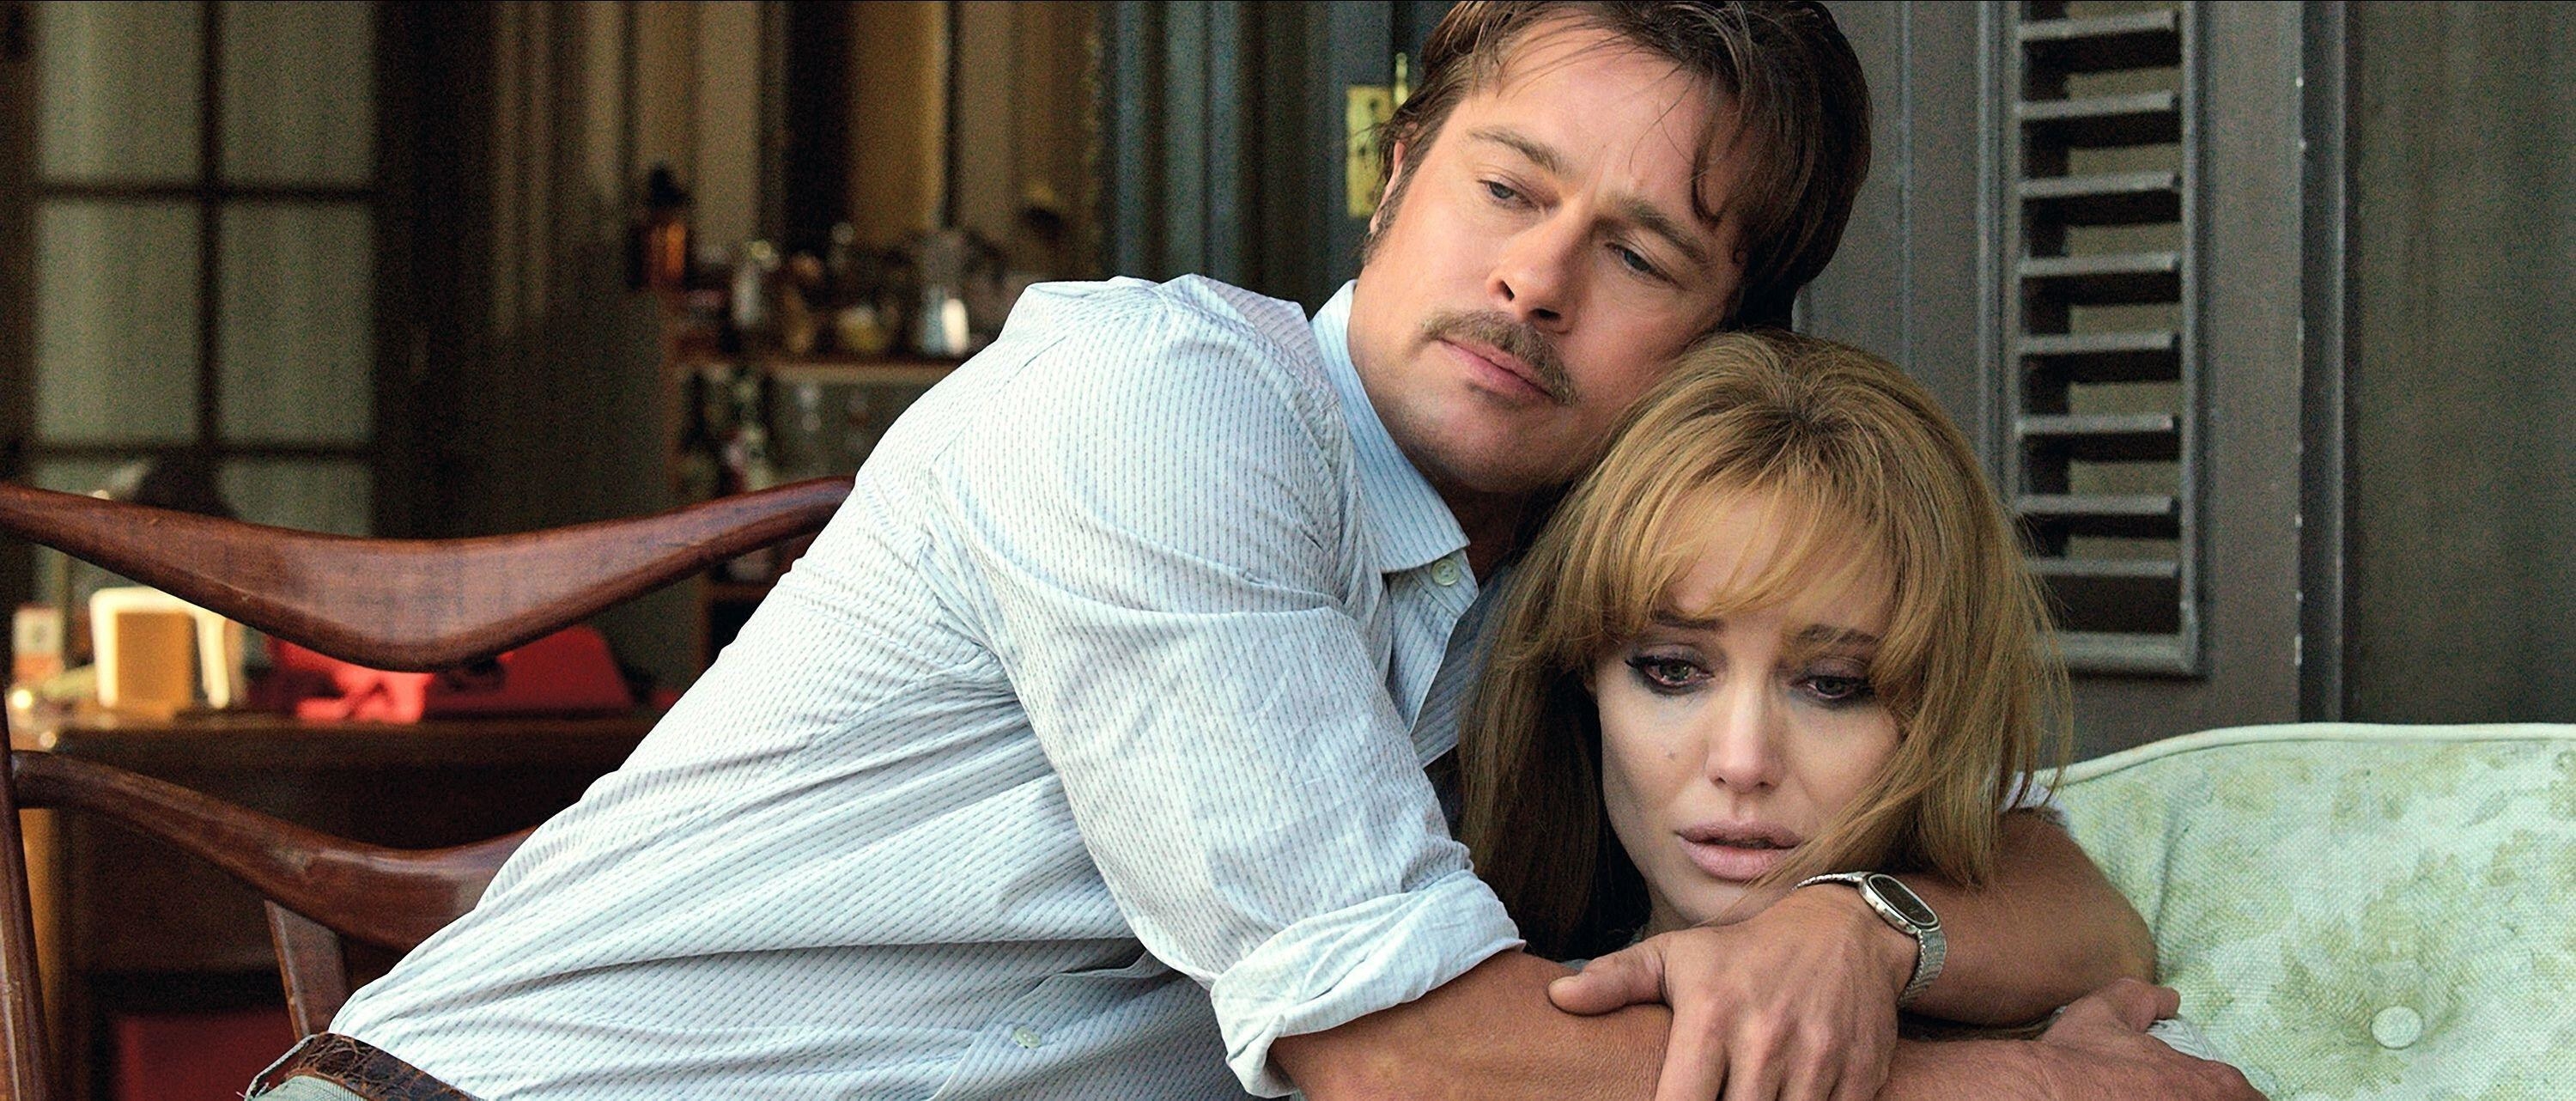 Brad Pitt wraps his arms around a distressed Angelina Jolie